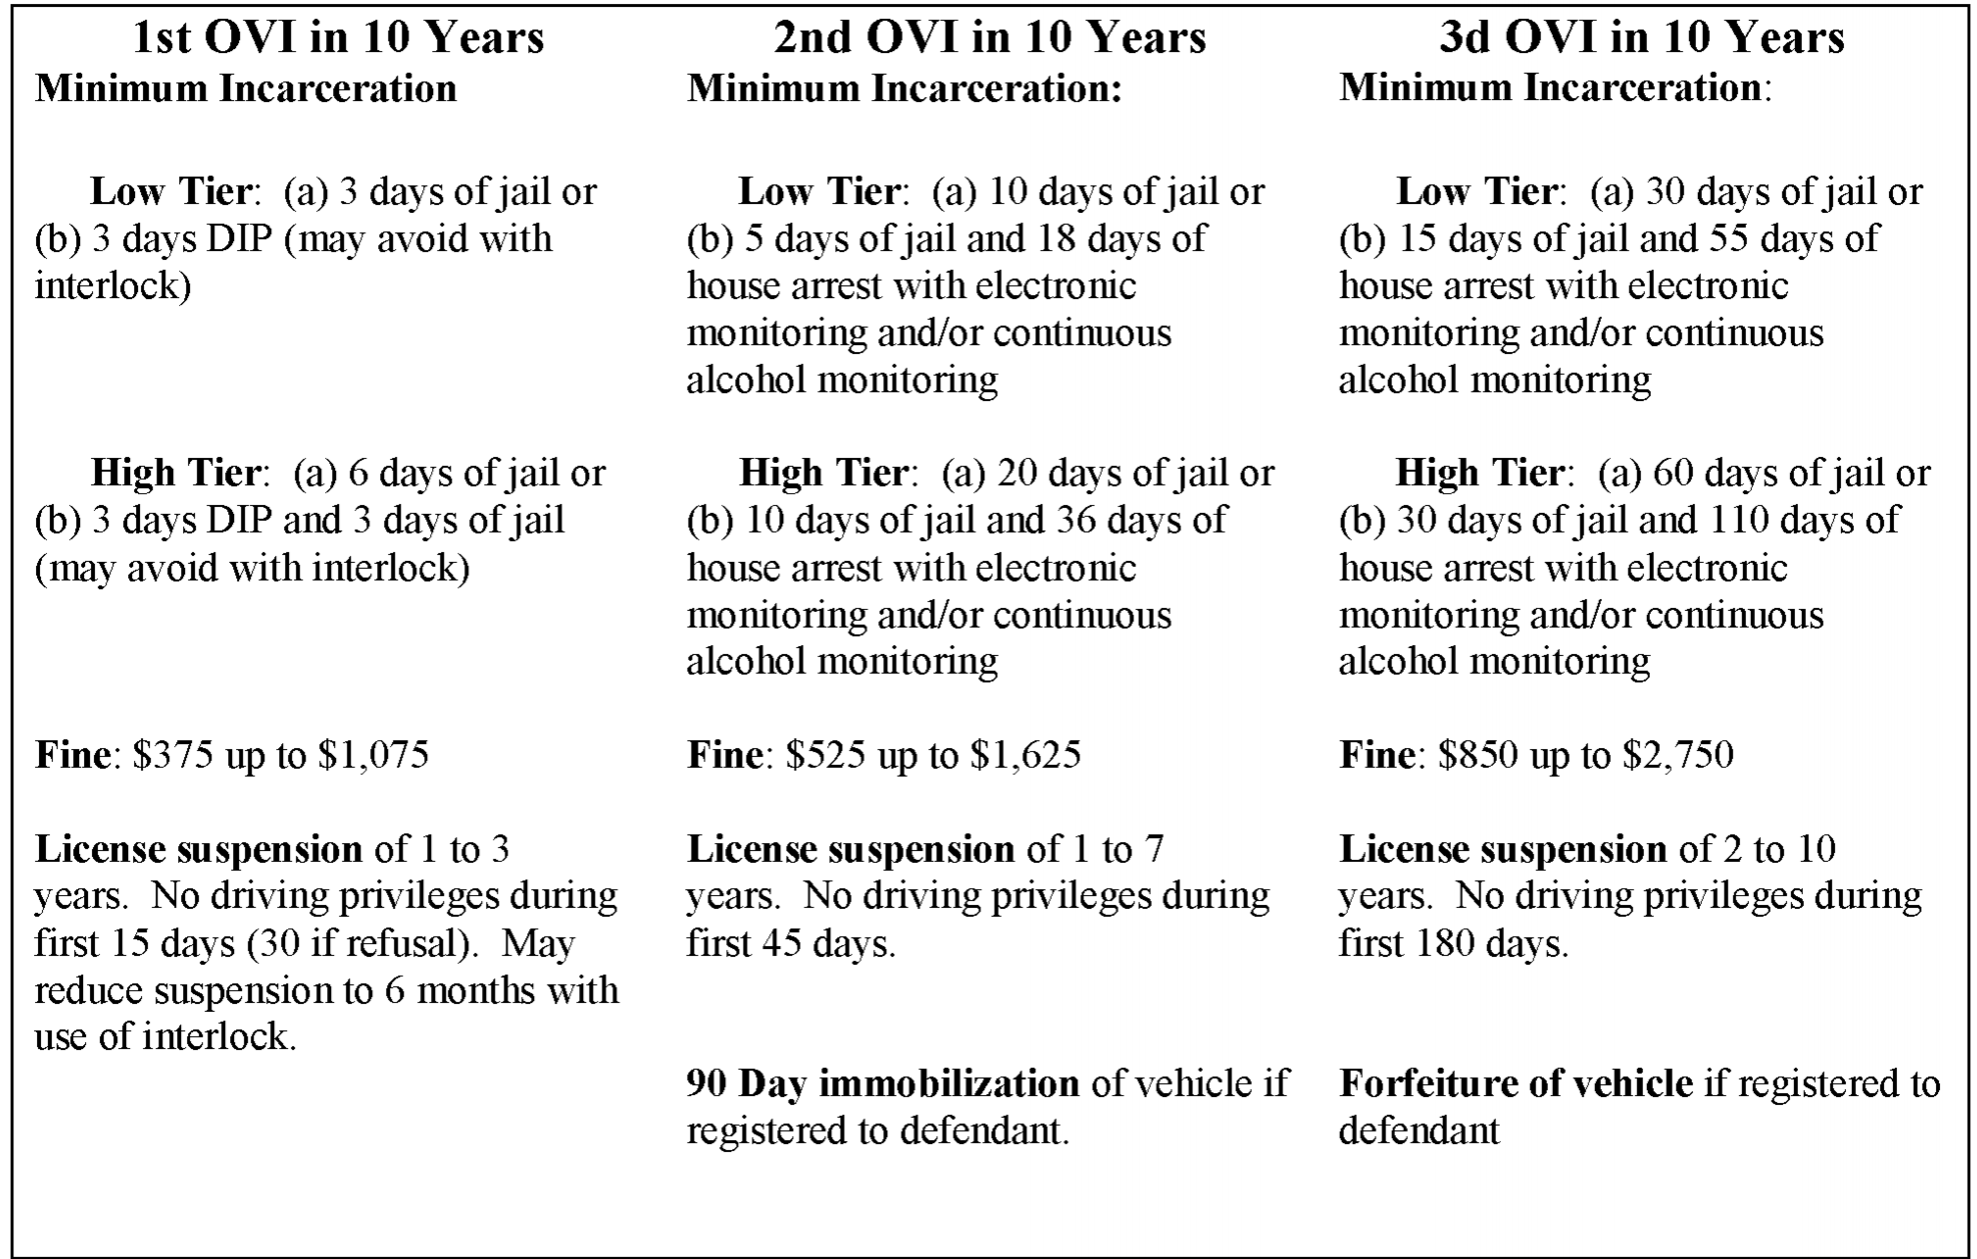 Ohio Ovi Penalties Chart 2018